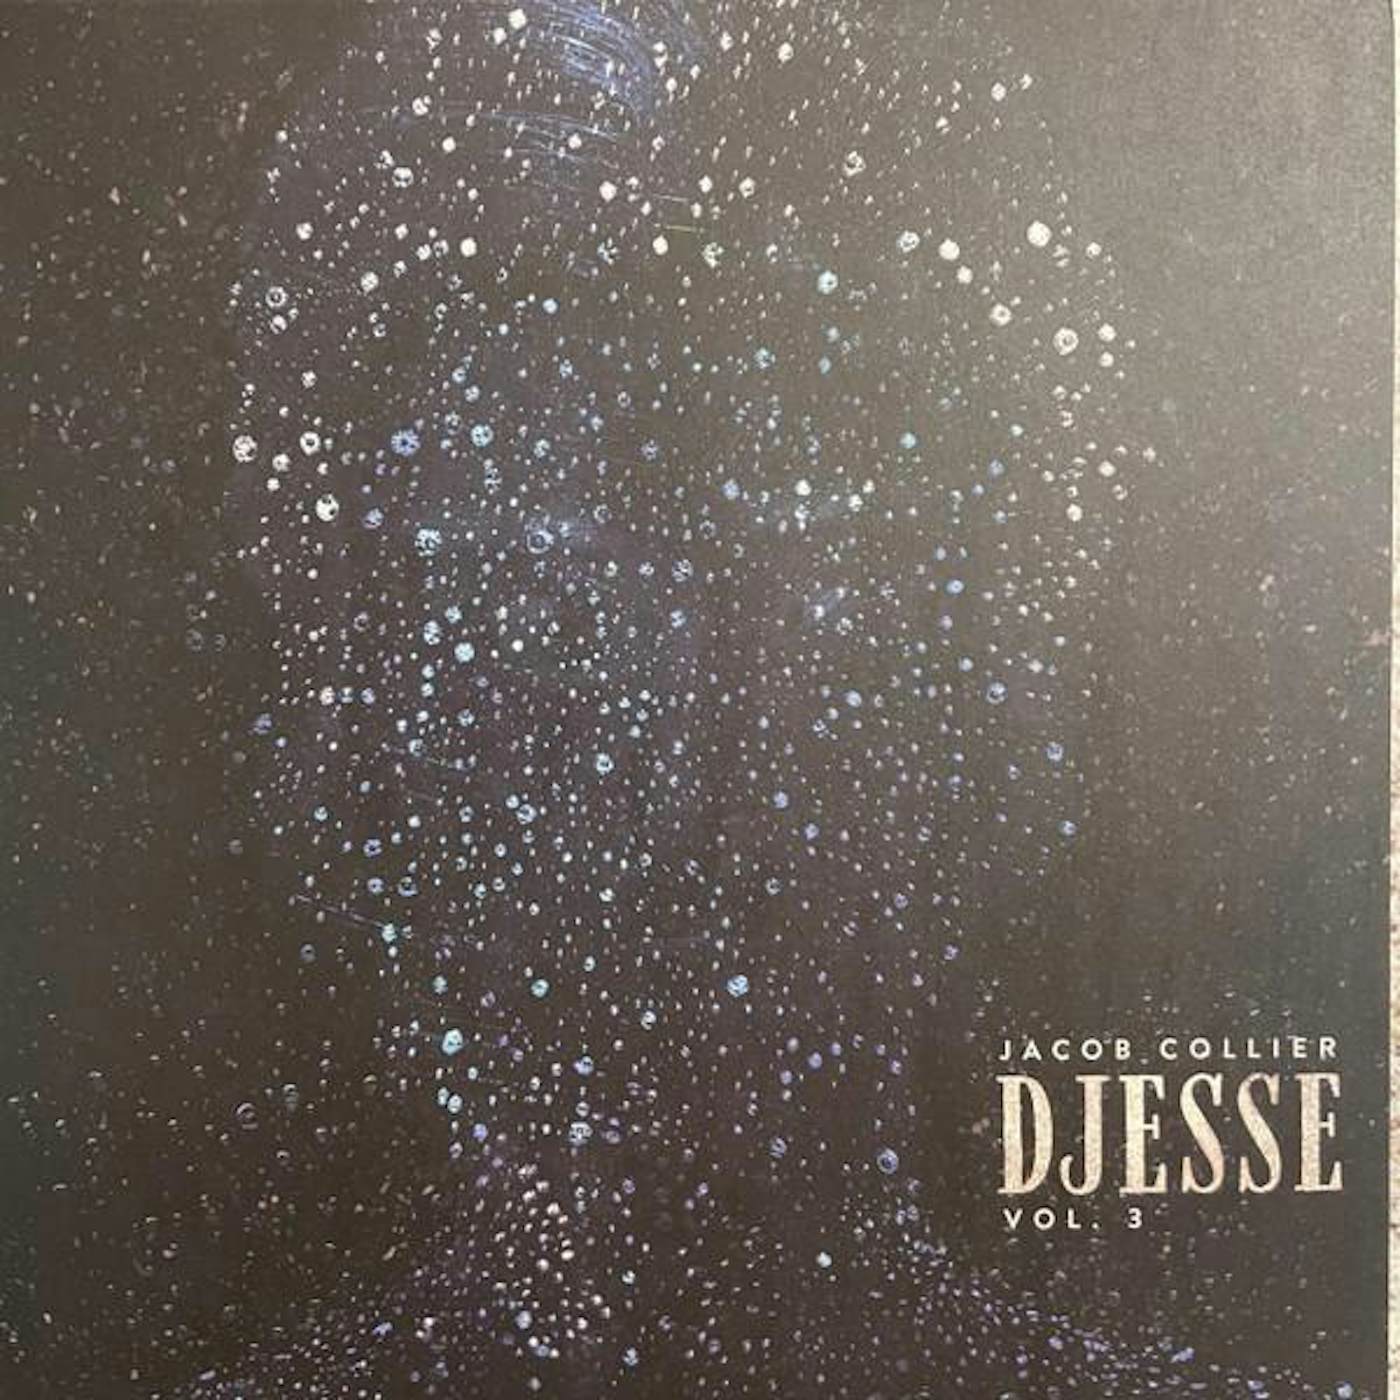 Jacob Collier DJESSE VOL. 3 Vinyl Record